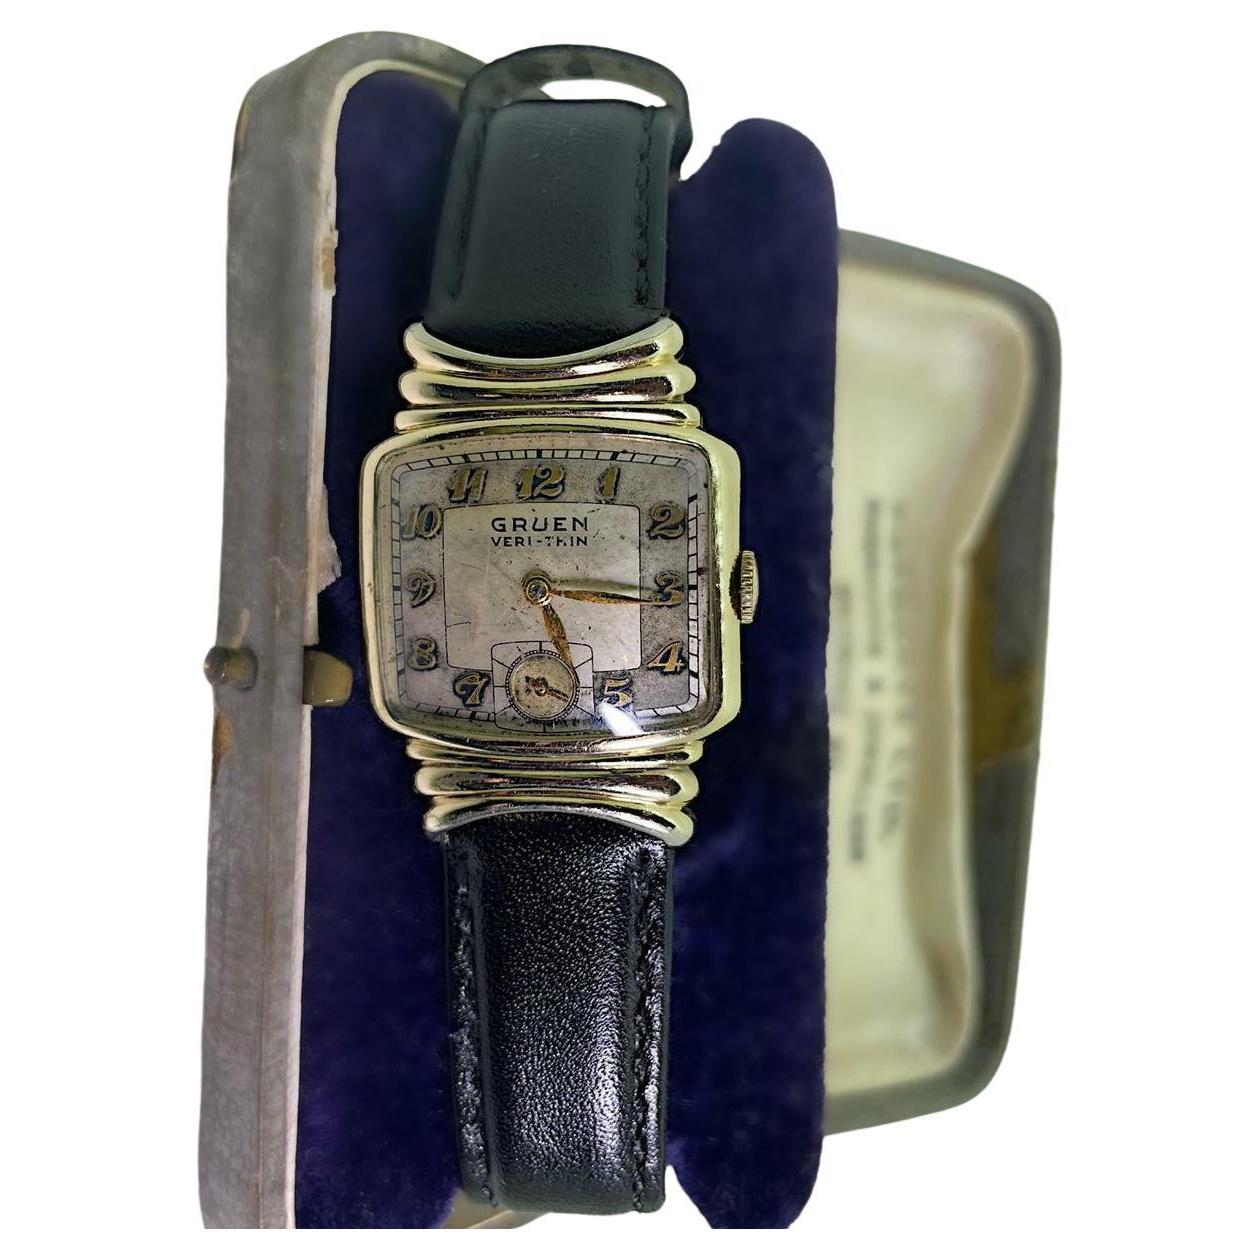 Rare Art-Deco Gruen Veri-Thin Manual Watch. Unusual TV Shaped Case. Hooded Lugs. For Sale